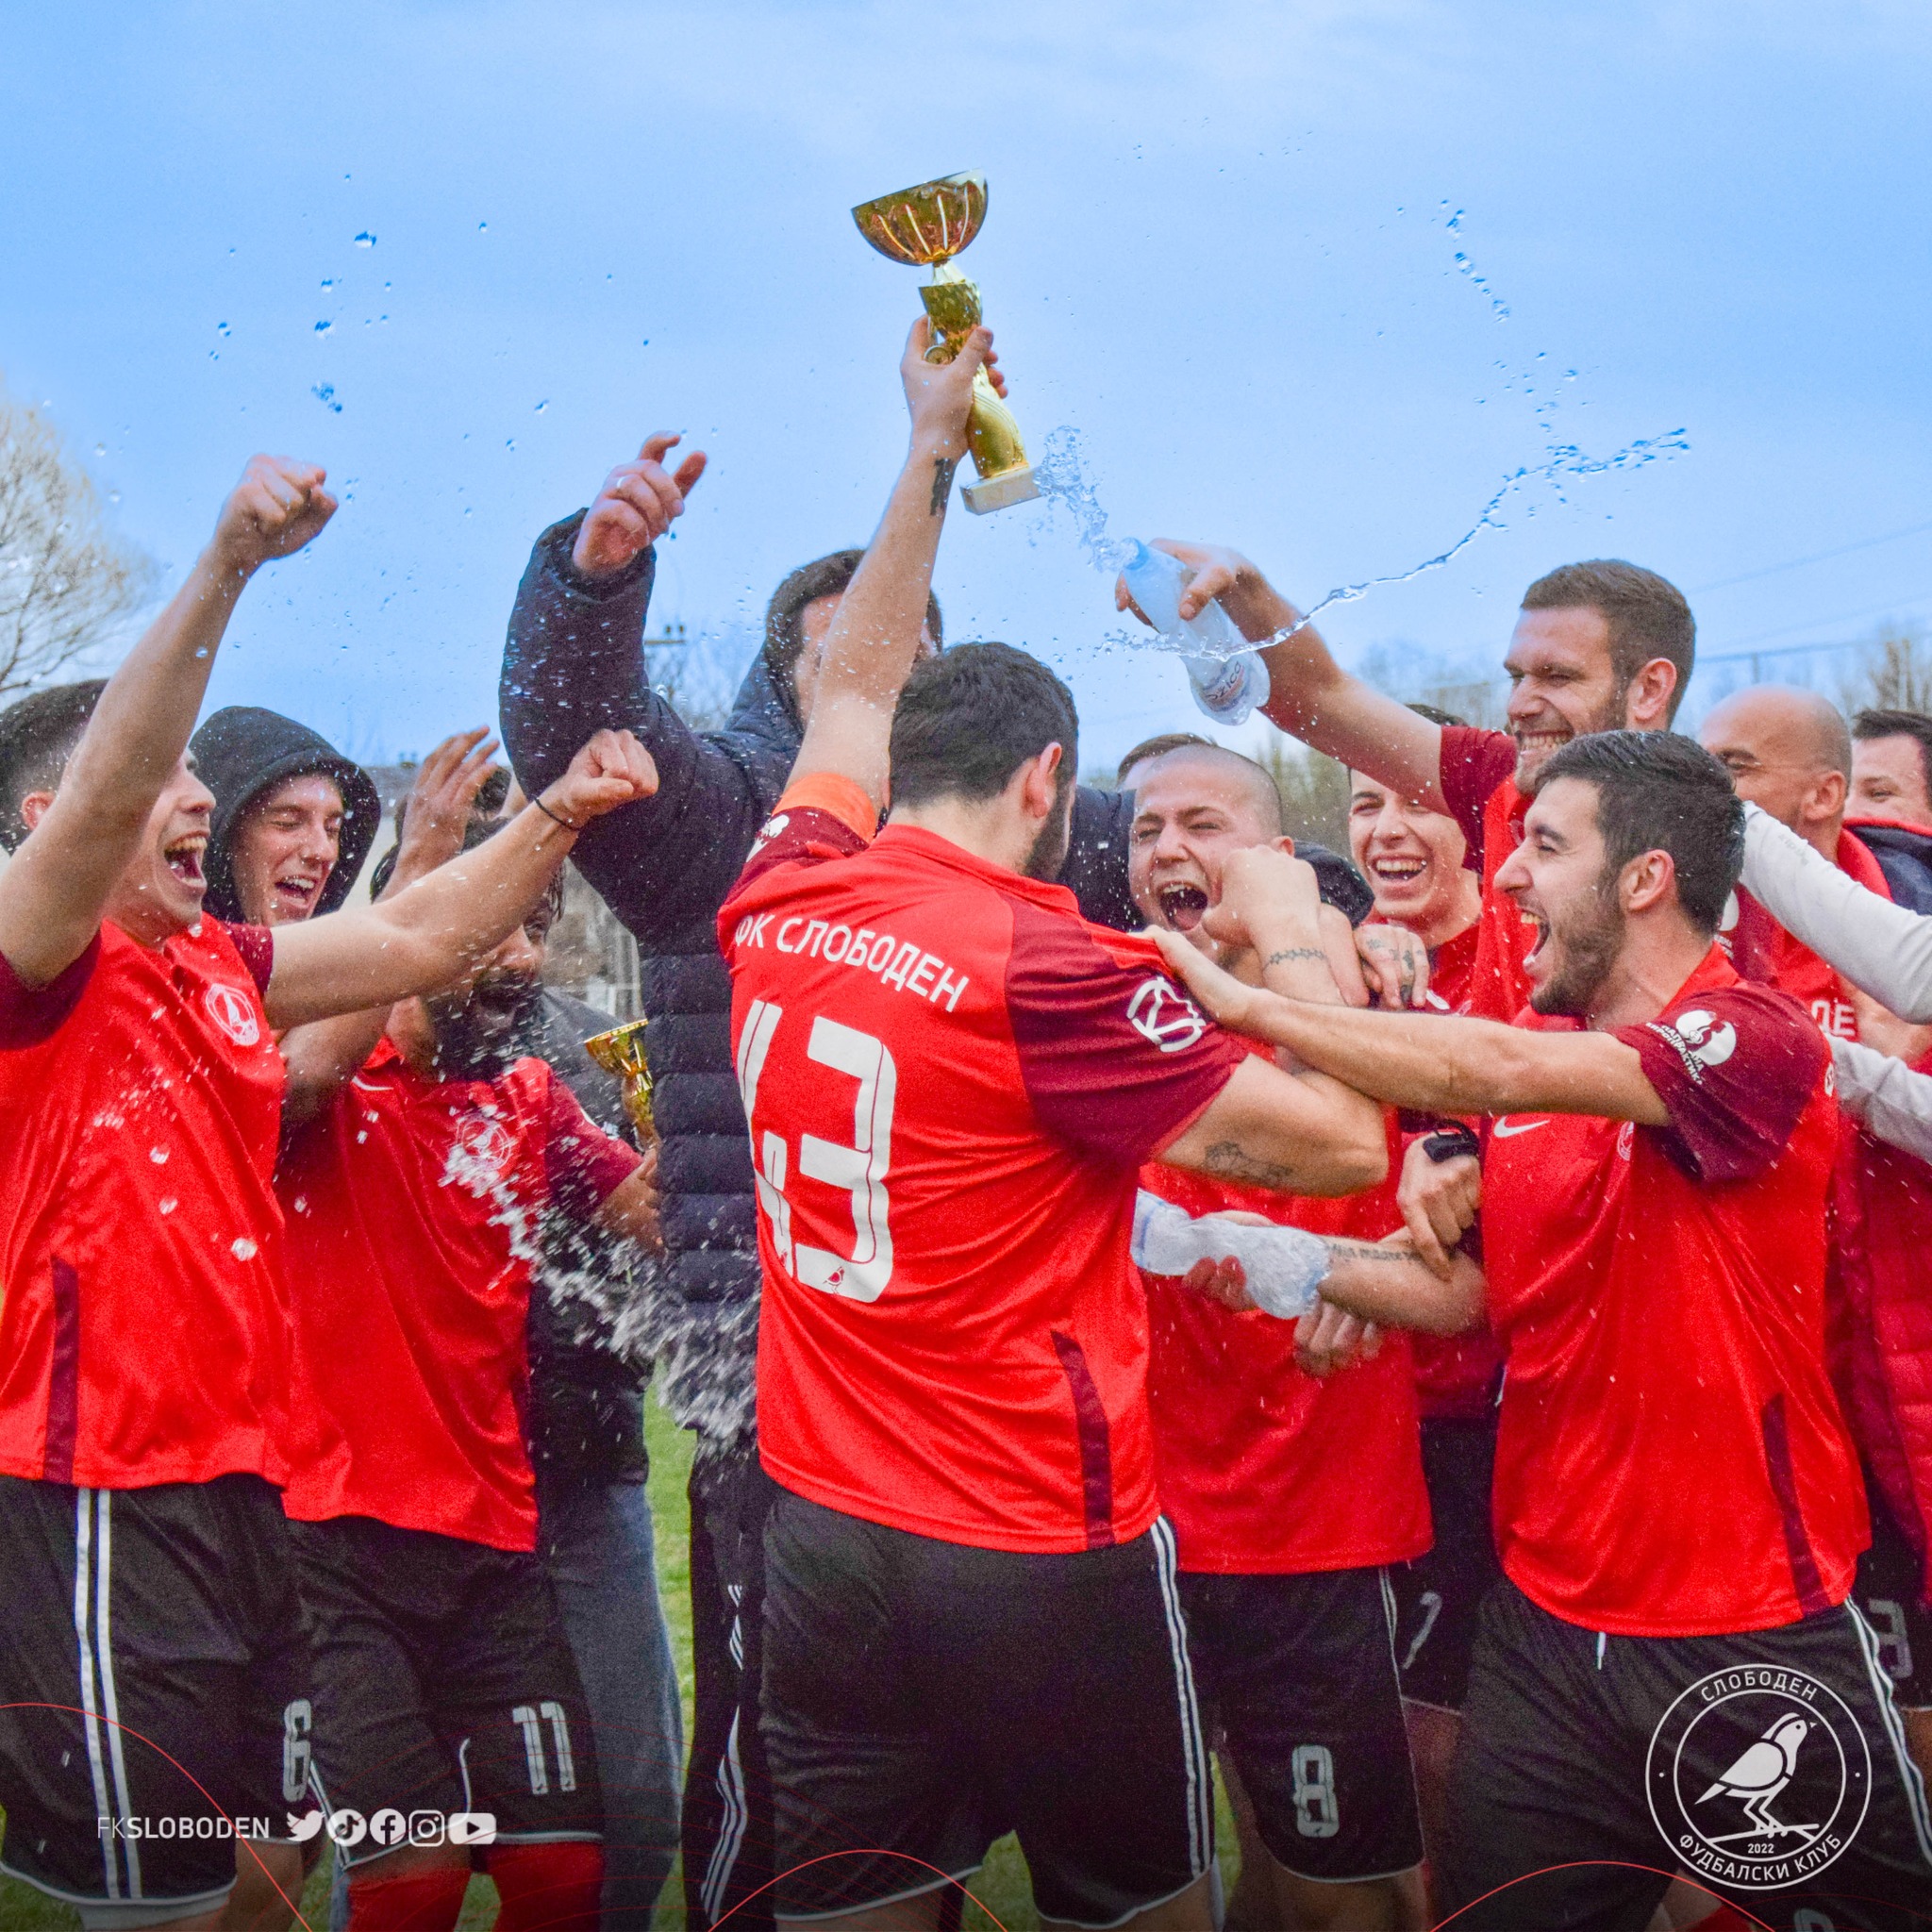 Sloboden win in Dobroshane tournament final